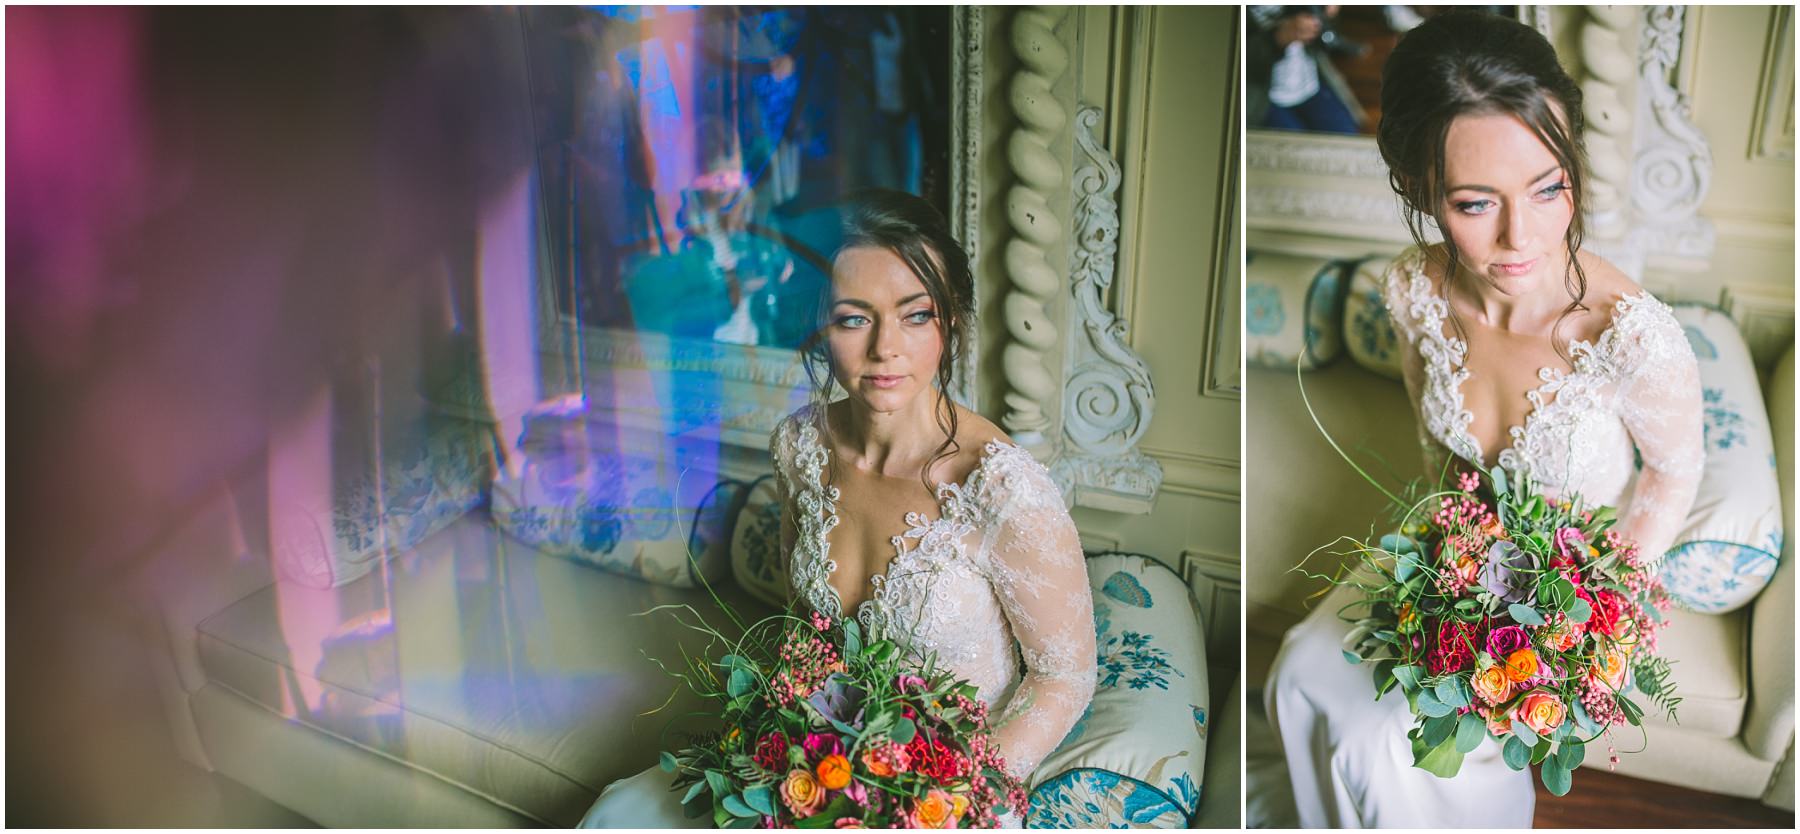 Two bridal portraits